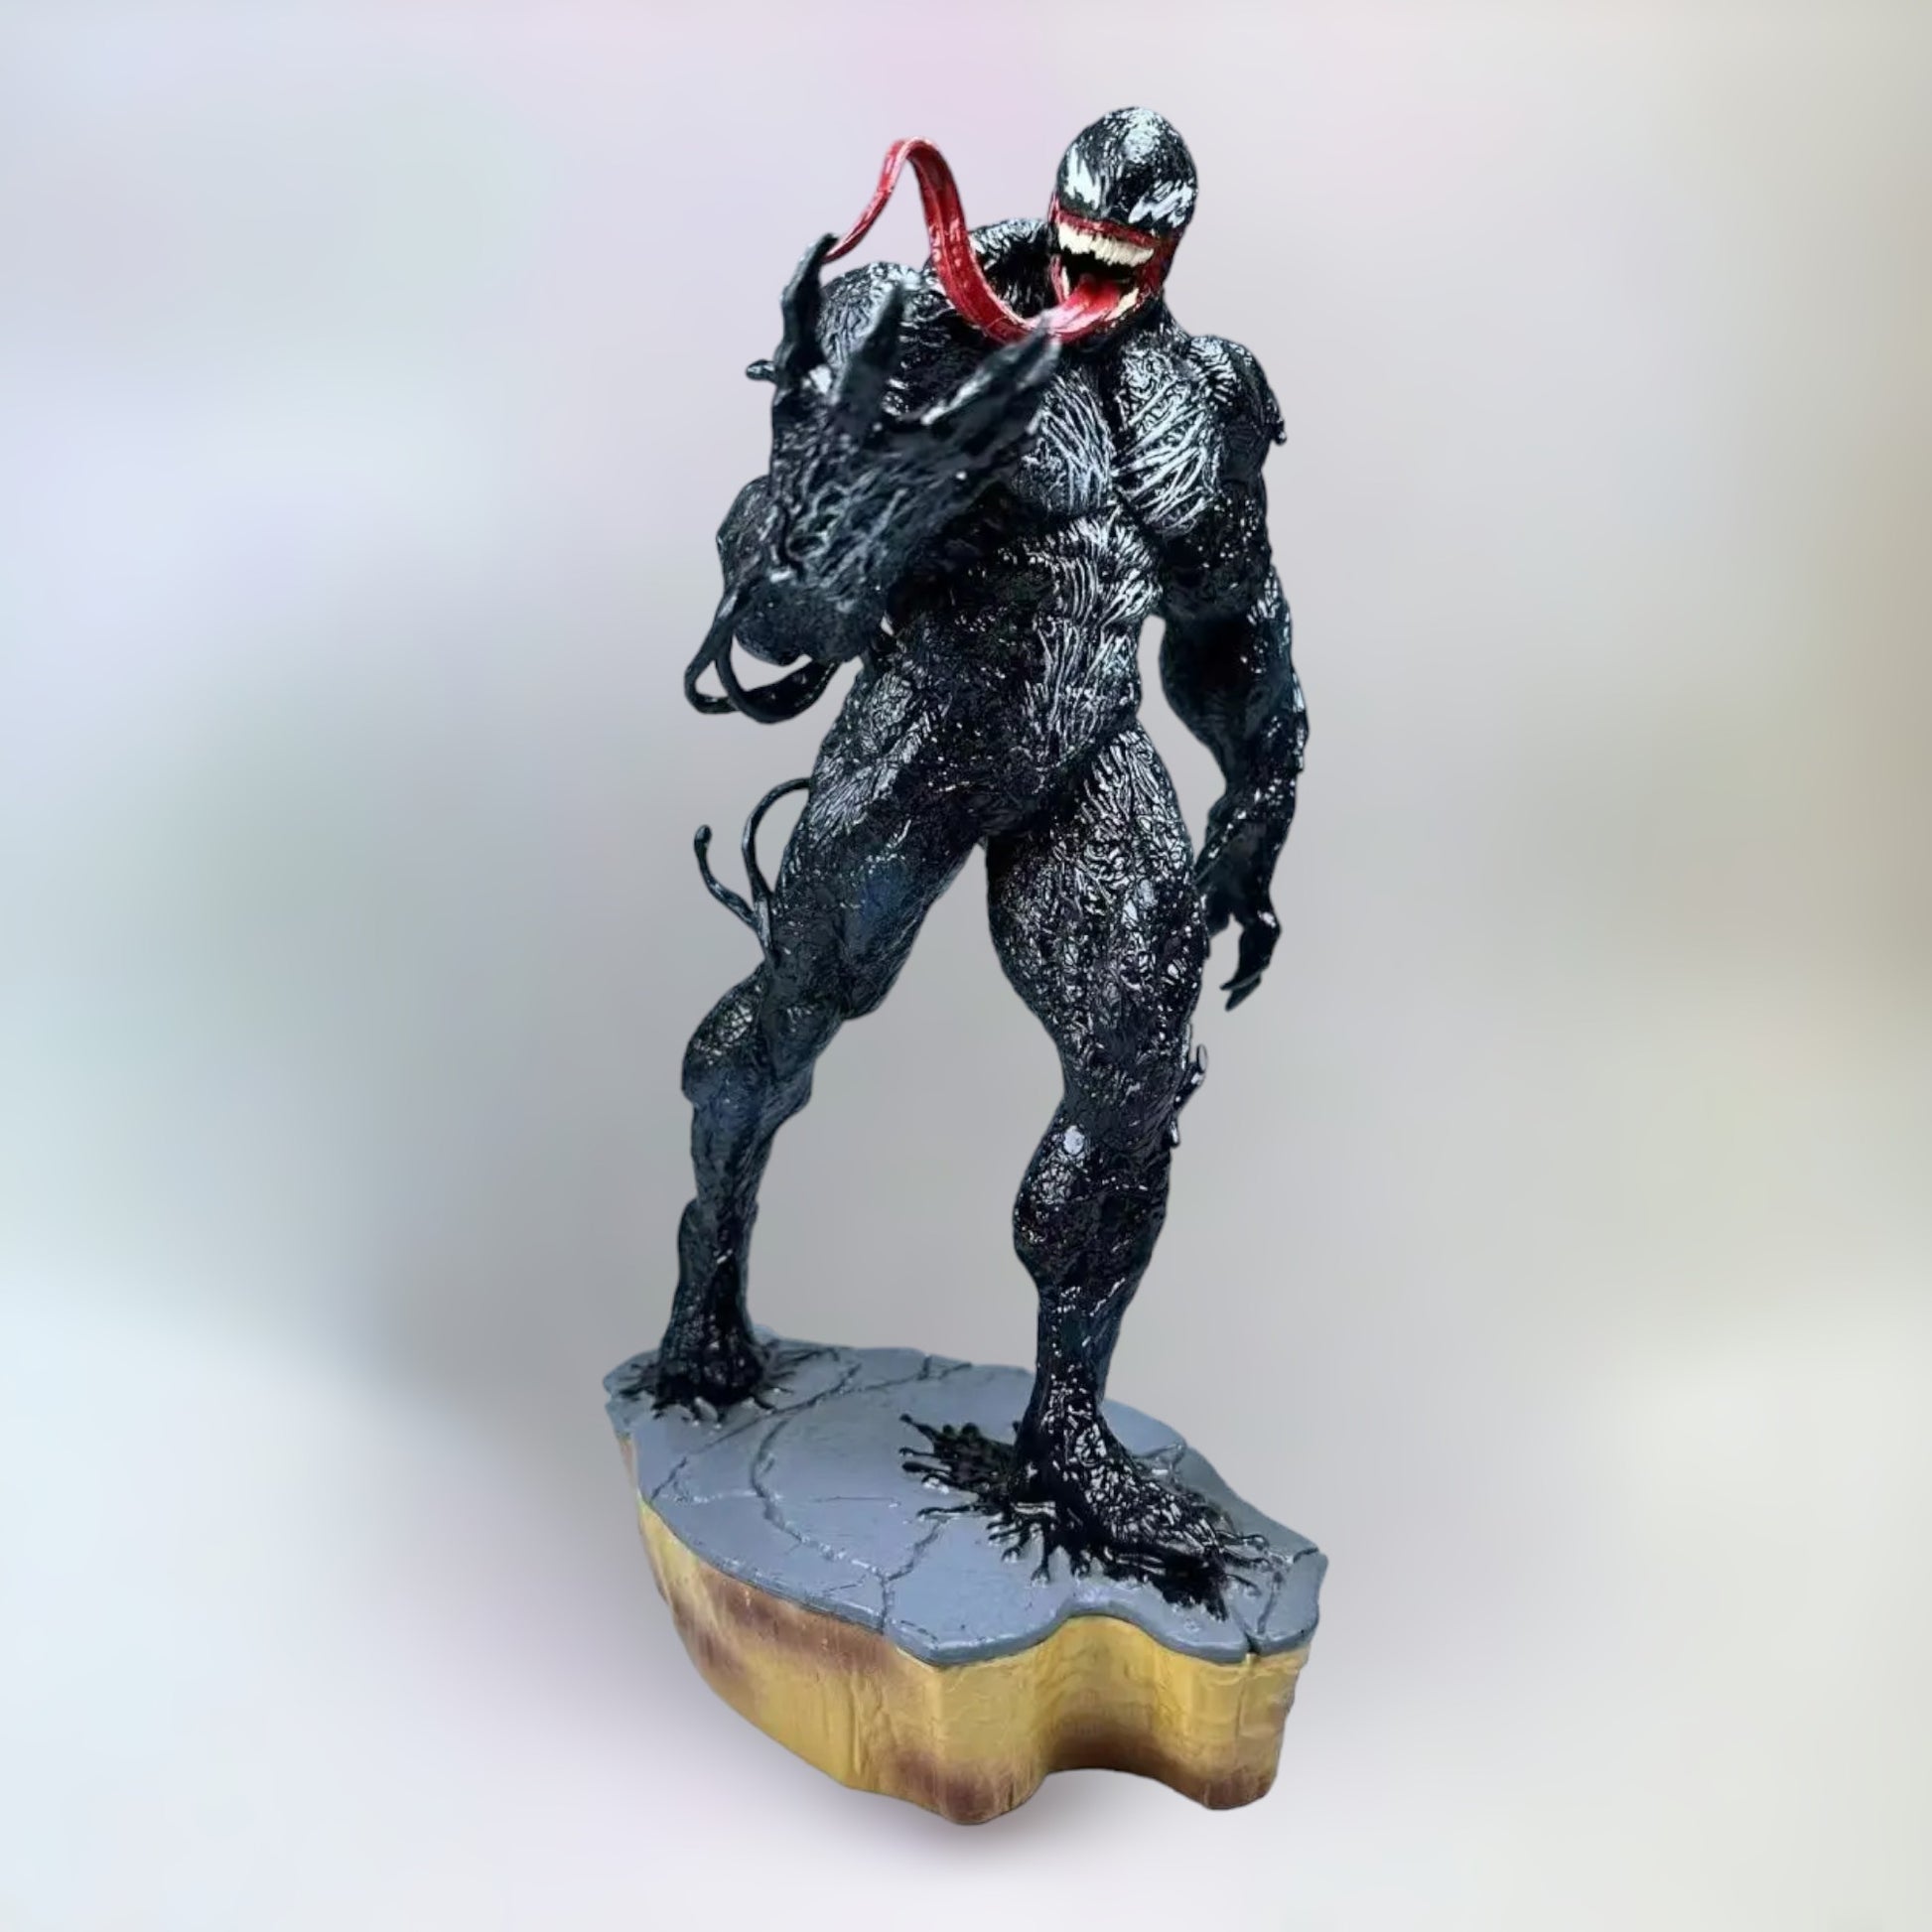 Venom Figure The Last Dance. The front side of a 30cm realistic Venom figure with a plain white background.